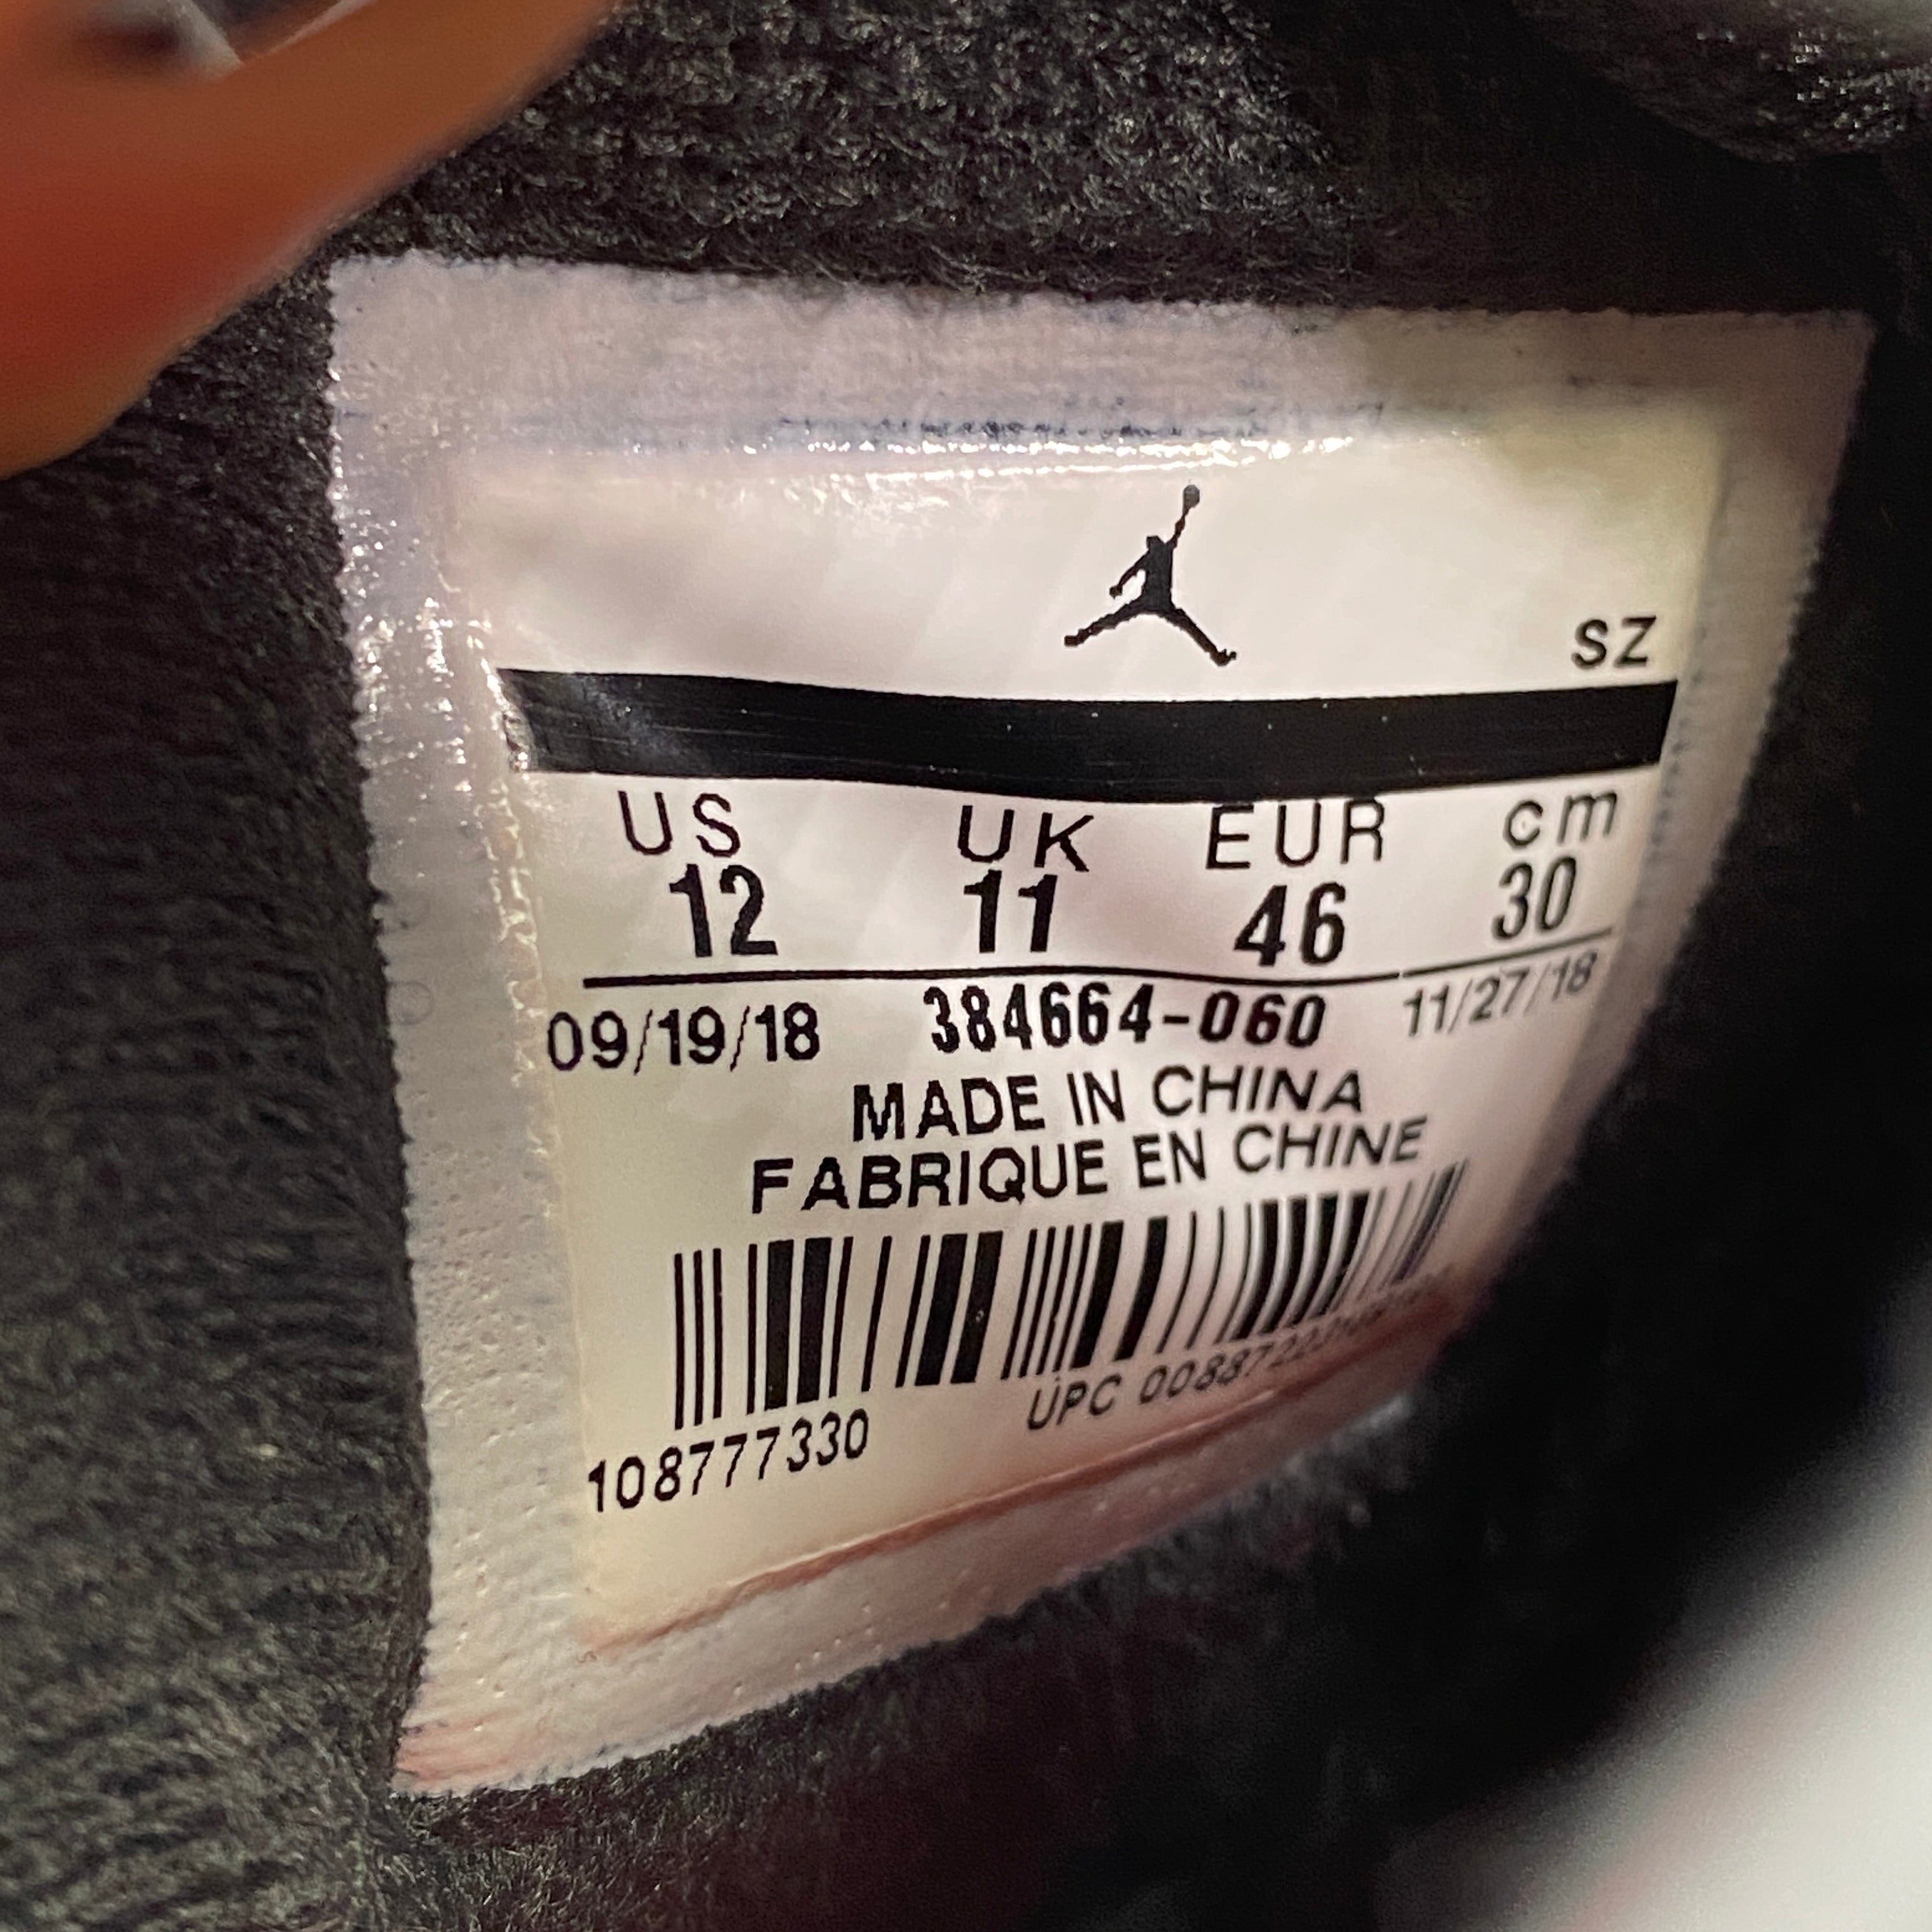 Air Jordan 6 Retro &quot;Infrared&quot; 2019 New Size 12